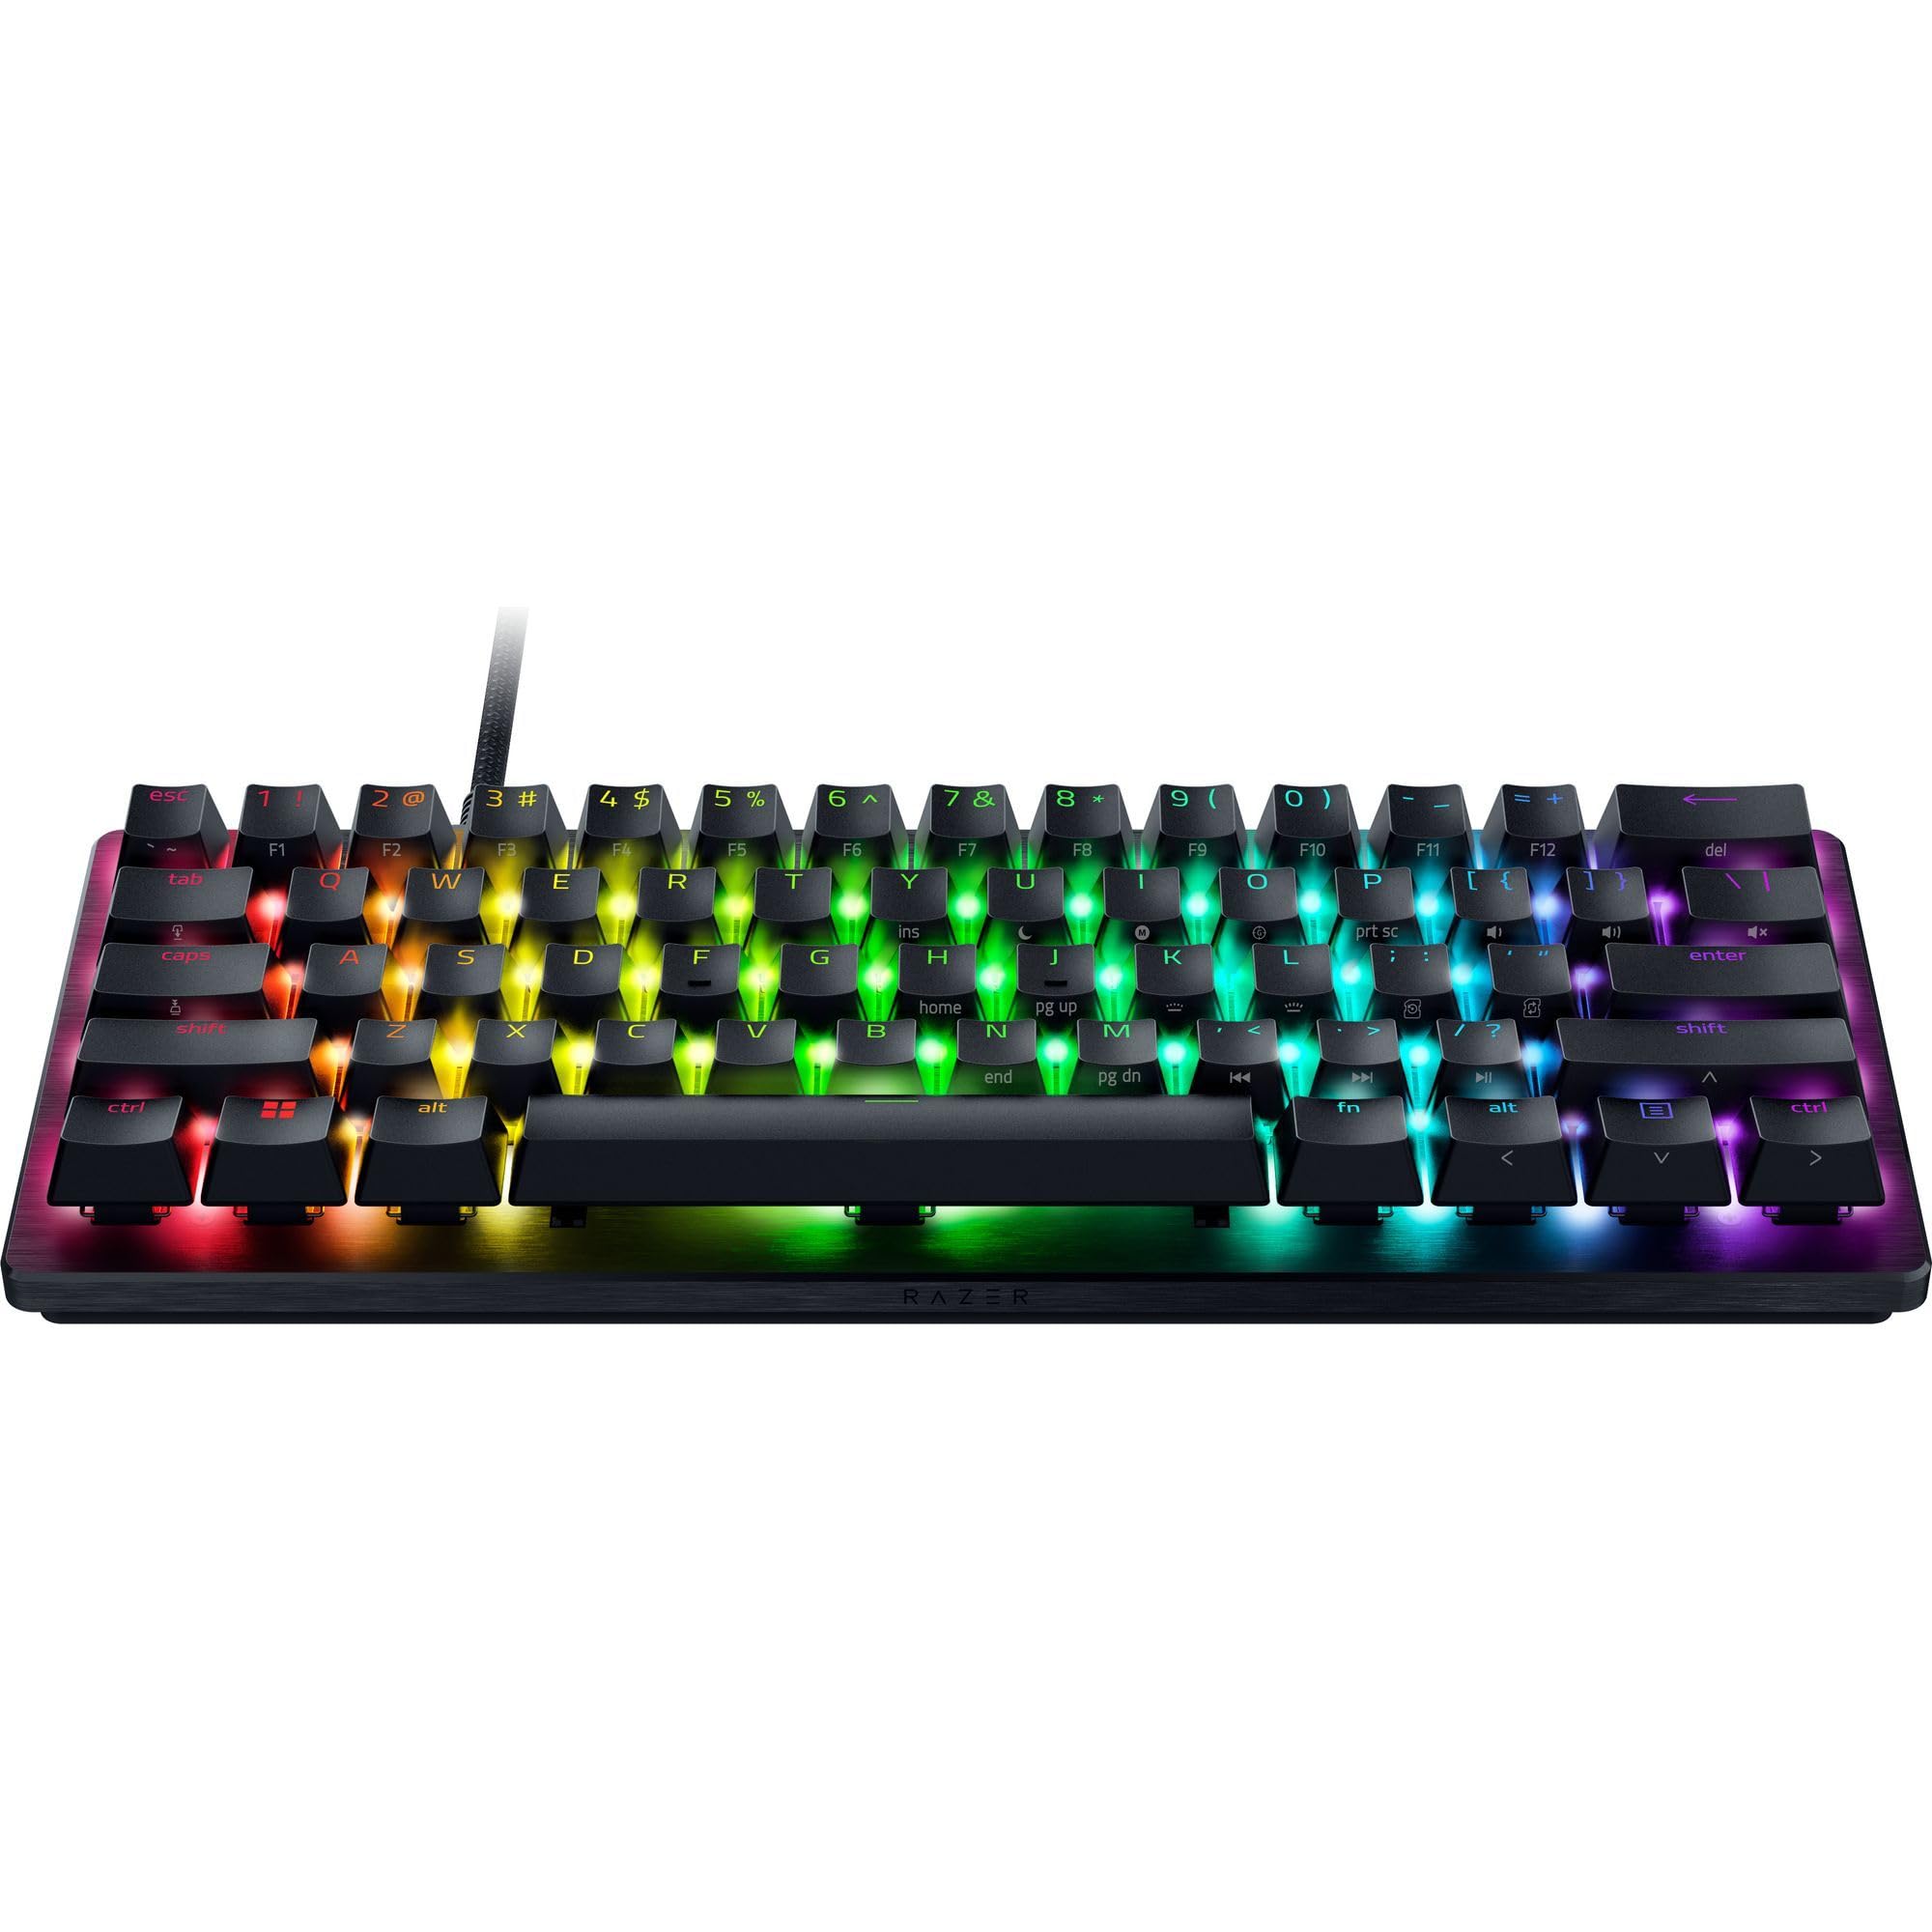 Razer Huntsman V3 Pro Mini 60% Gaming Keyboard: Analog Optical Switches w/Rapid Trigger & Adjustable Actuation - Onboard Adjustments - Dual-Purpose Mod Keys - Doubleshot PBT Keycaps - Black